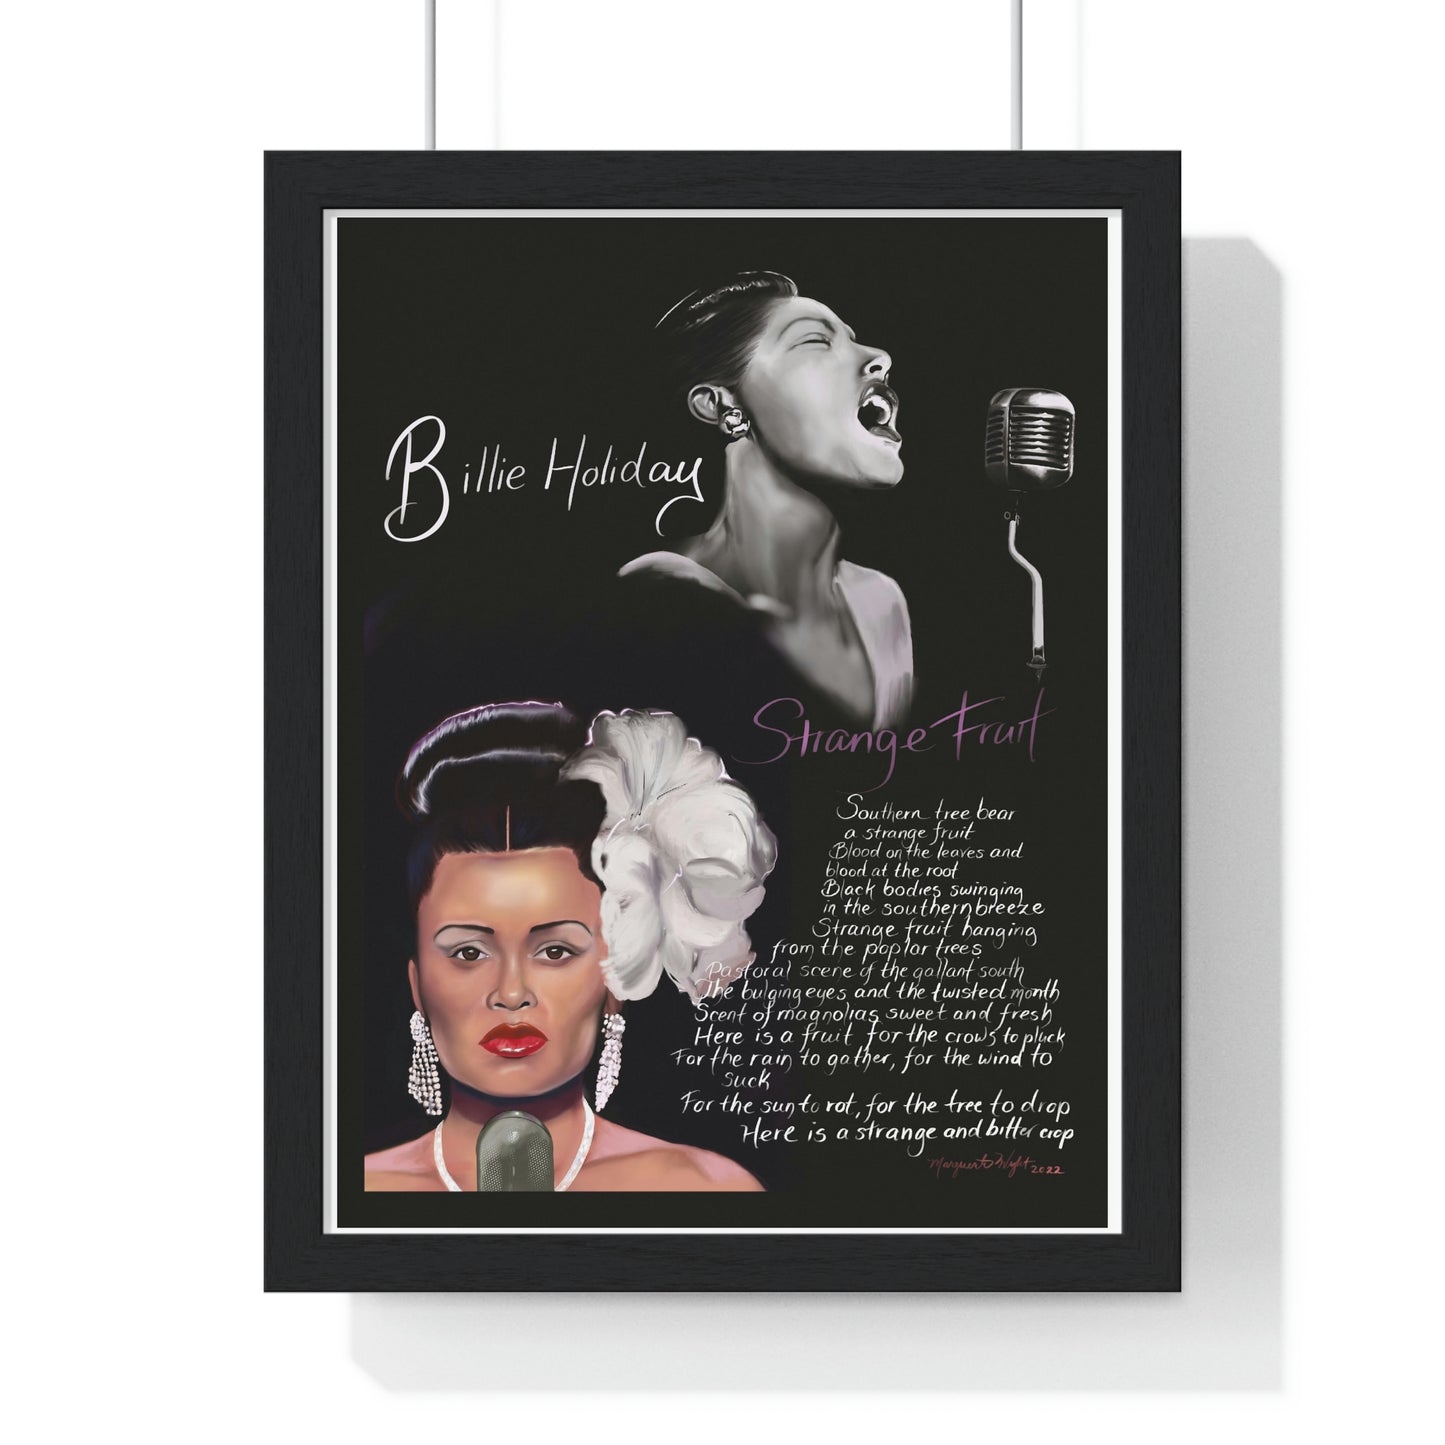 Billie Holiday - Wall Art print